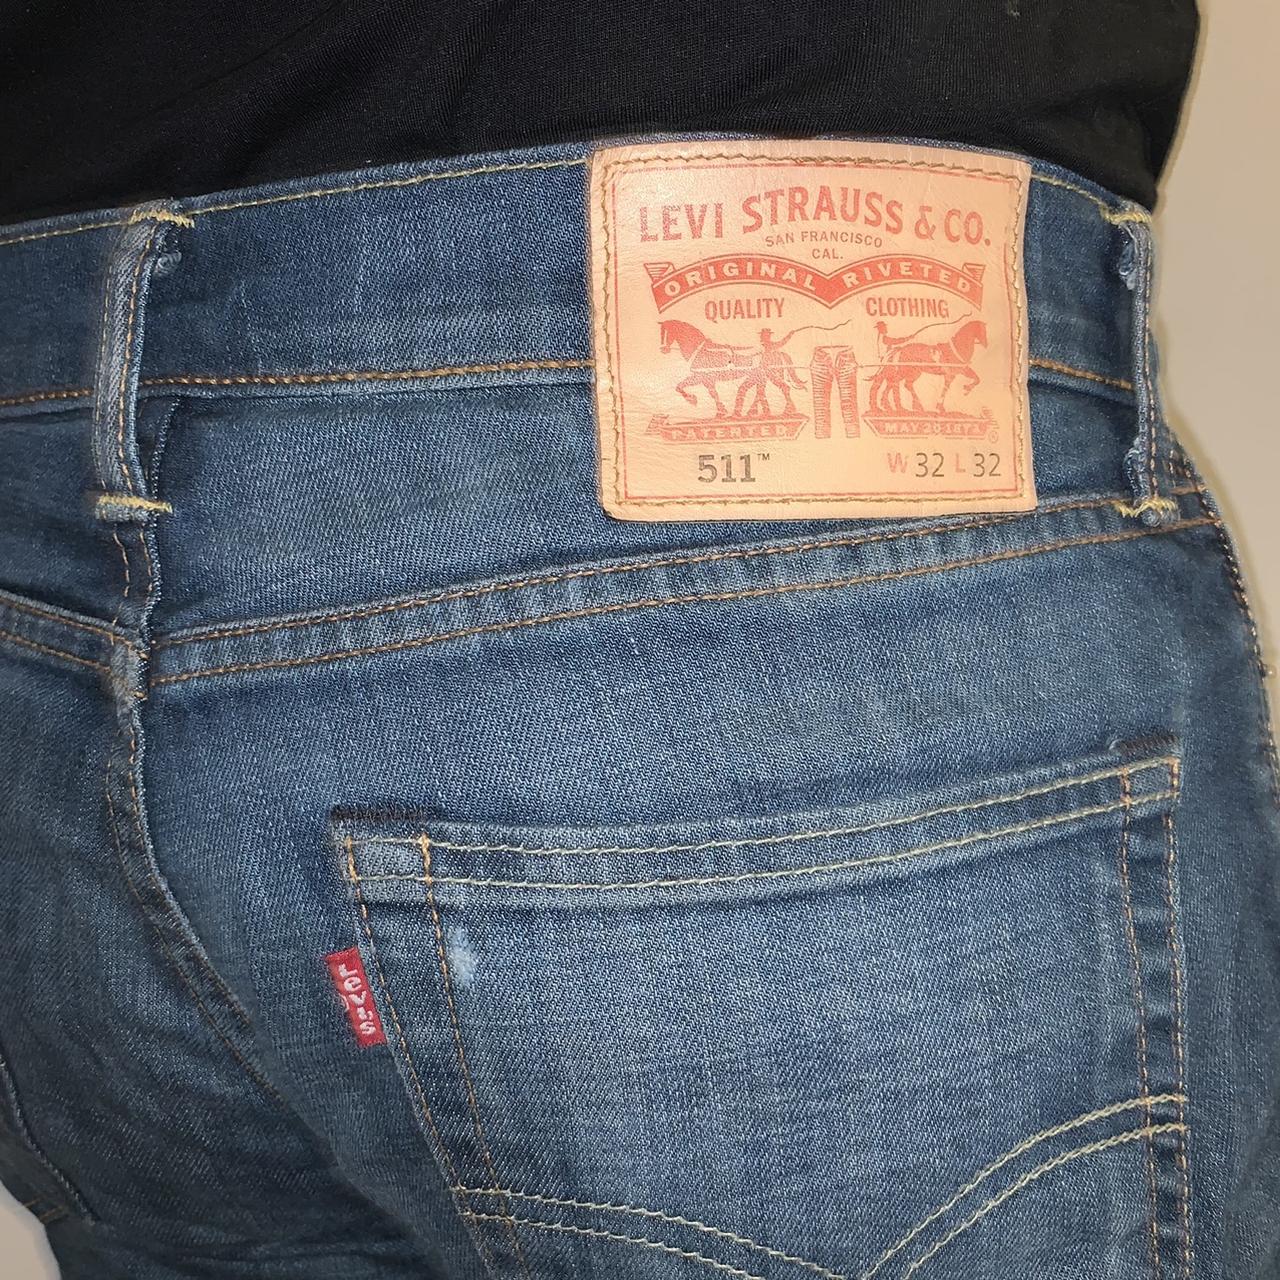 Levi's 511 in a blue wash, 32x32 VGC #levis #jeans - Depop